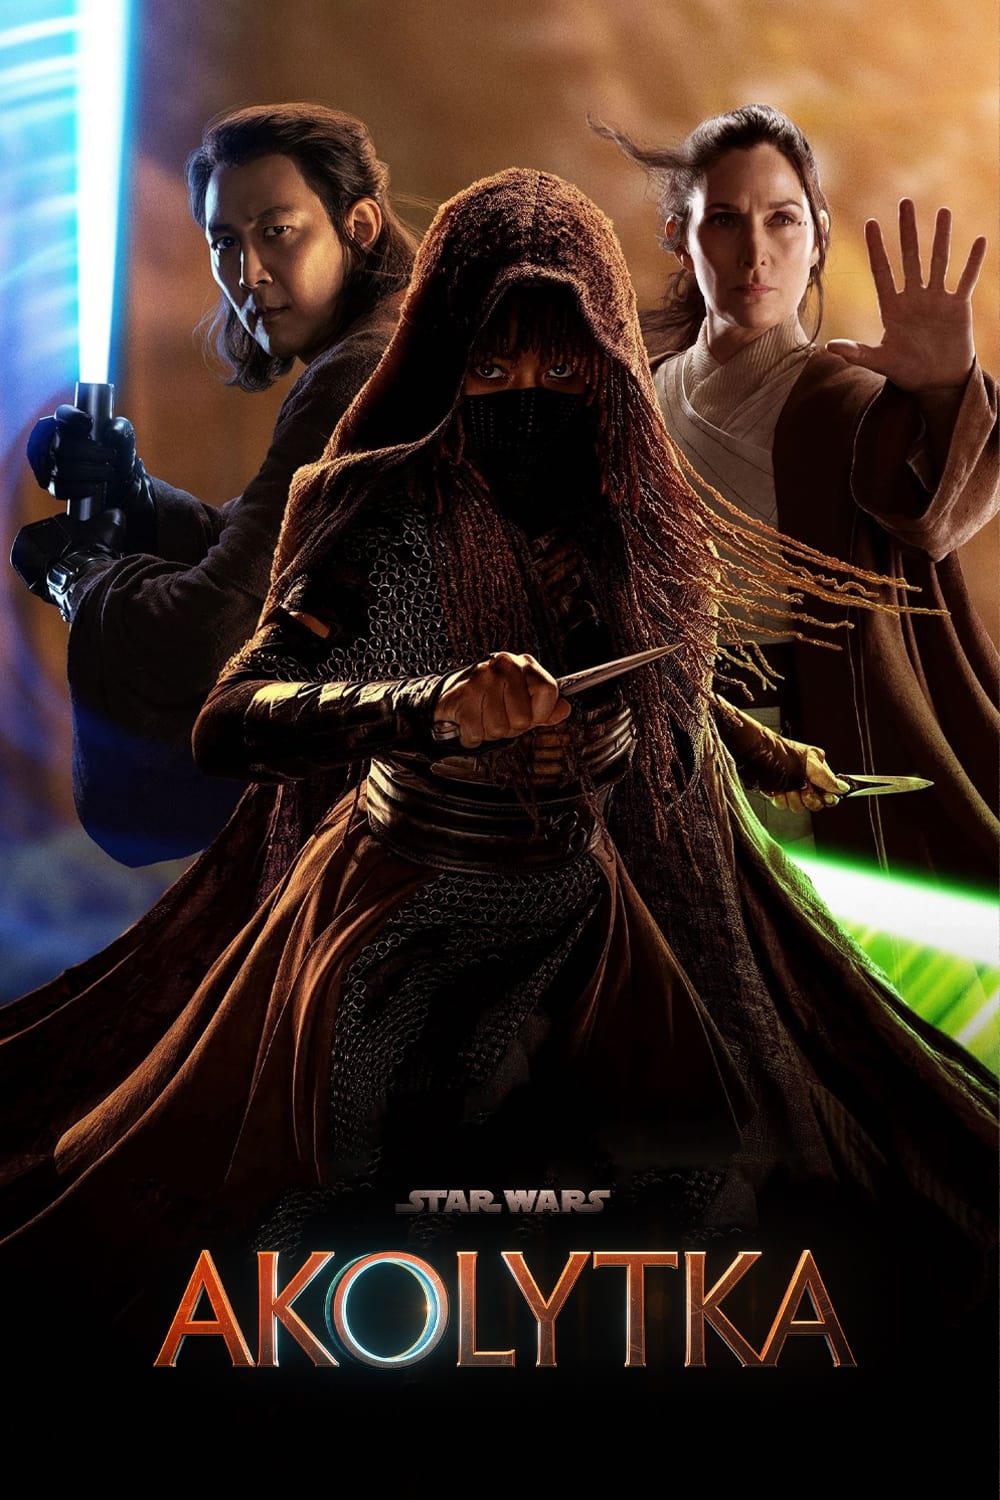 Plakát pro film “Star Wars: Akolytka”